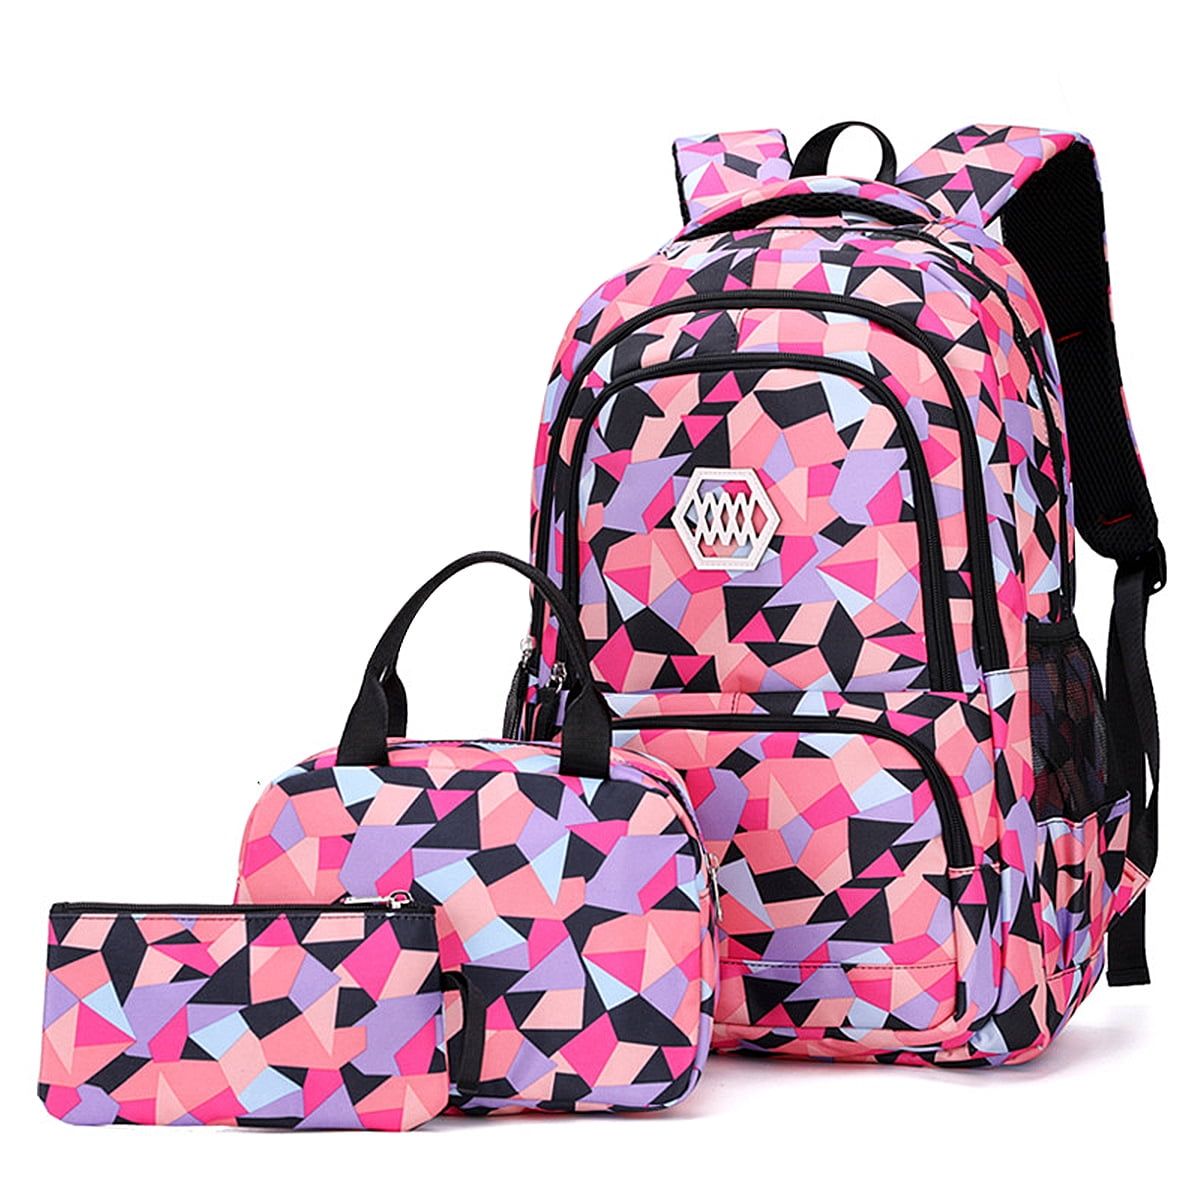 Backpack Shopping Bag School Bag Storage Bag For Men Women Girls Boys Personalized Pattern Australian Seascape Travel Bag 